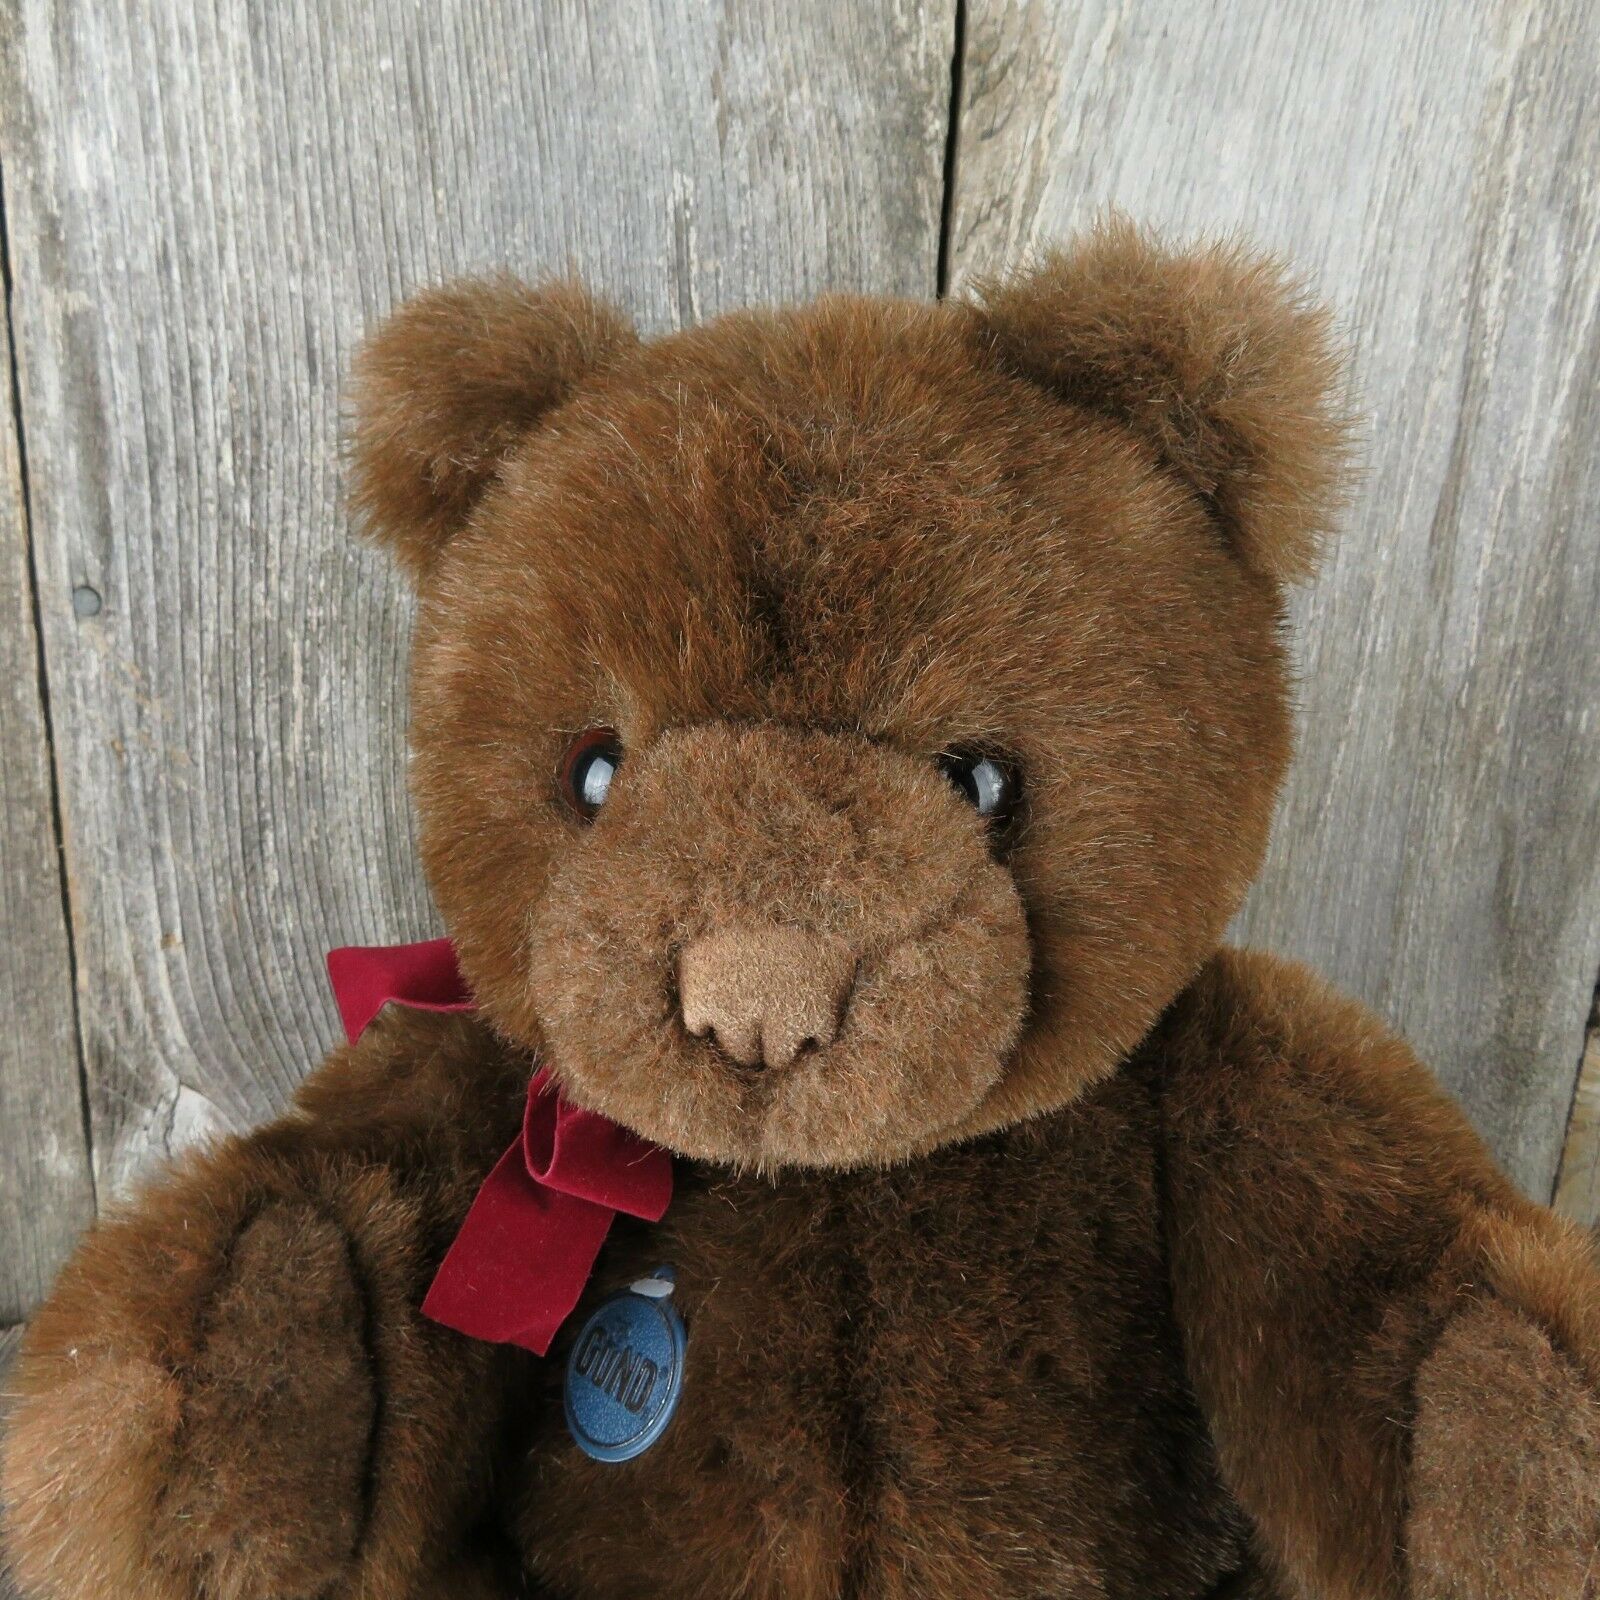 Vintage Teddy Bear Plush Gund Stuffed Animal Collector Classic 1983 Toy Doll - At Grandma's Table